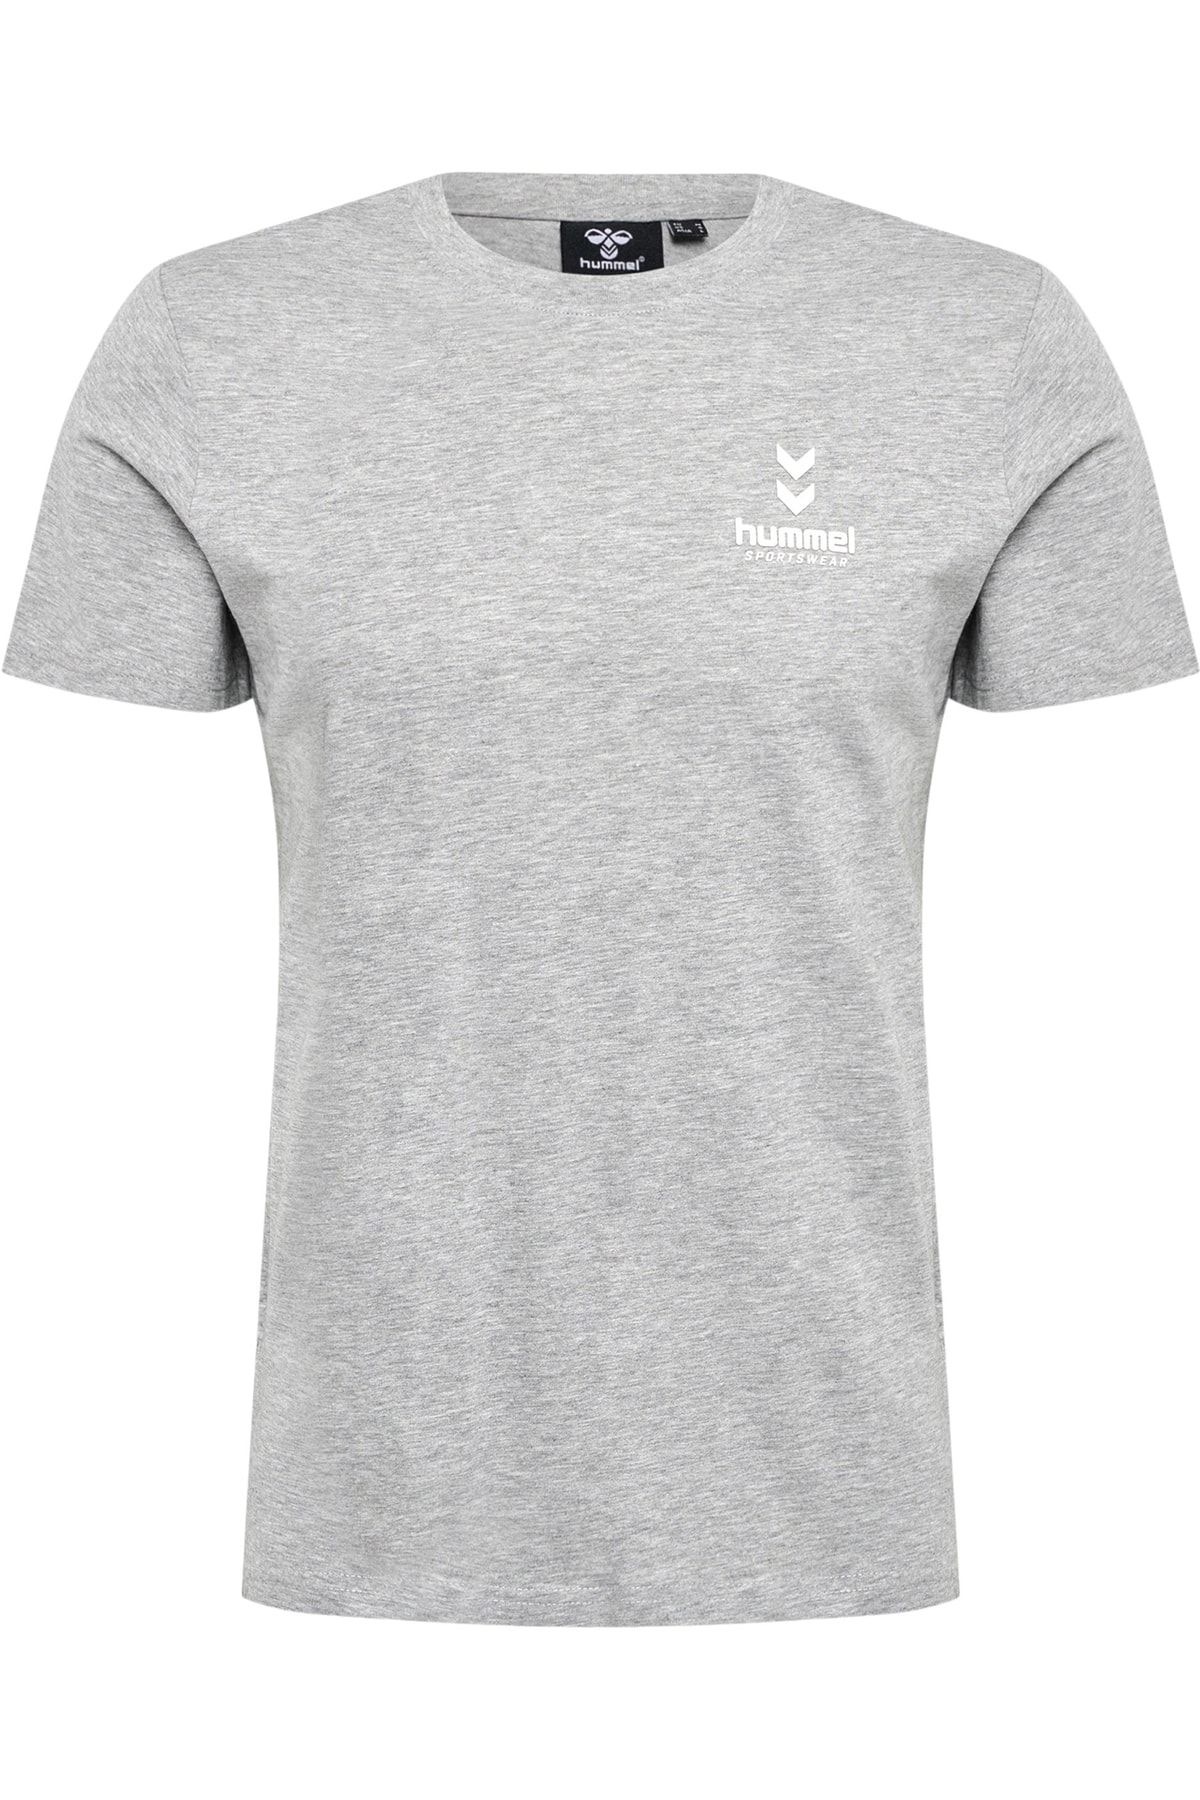 Trendyol Regular - HUMMEL T-Shirt - Fit - Grau